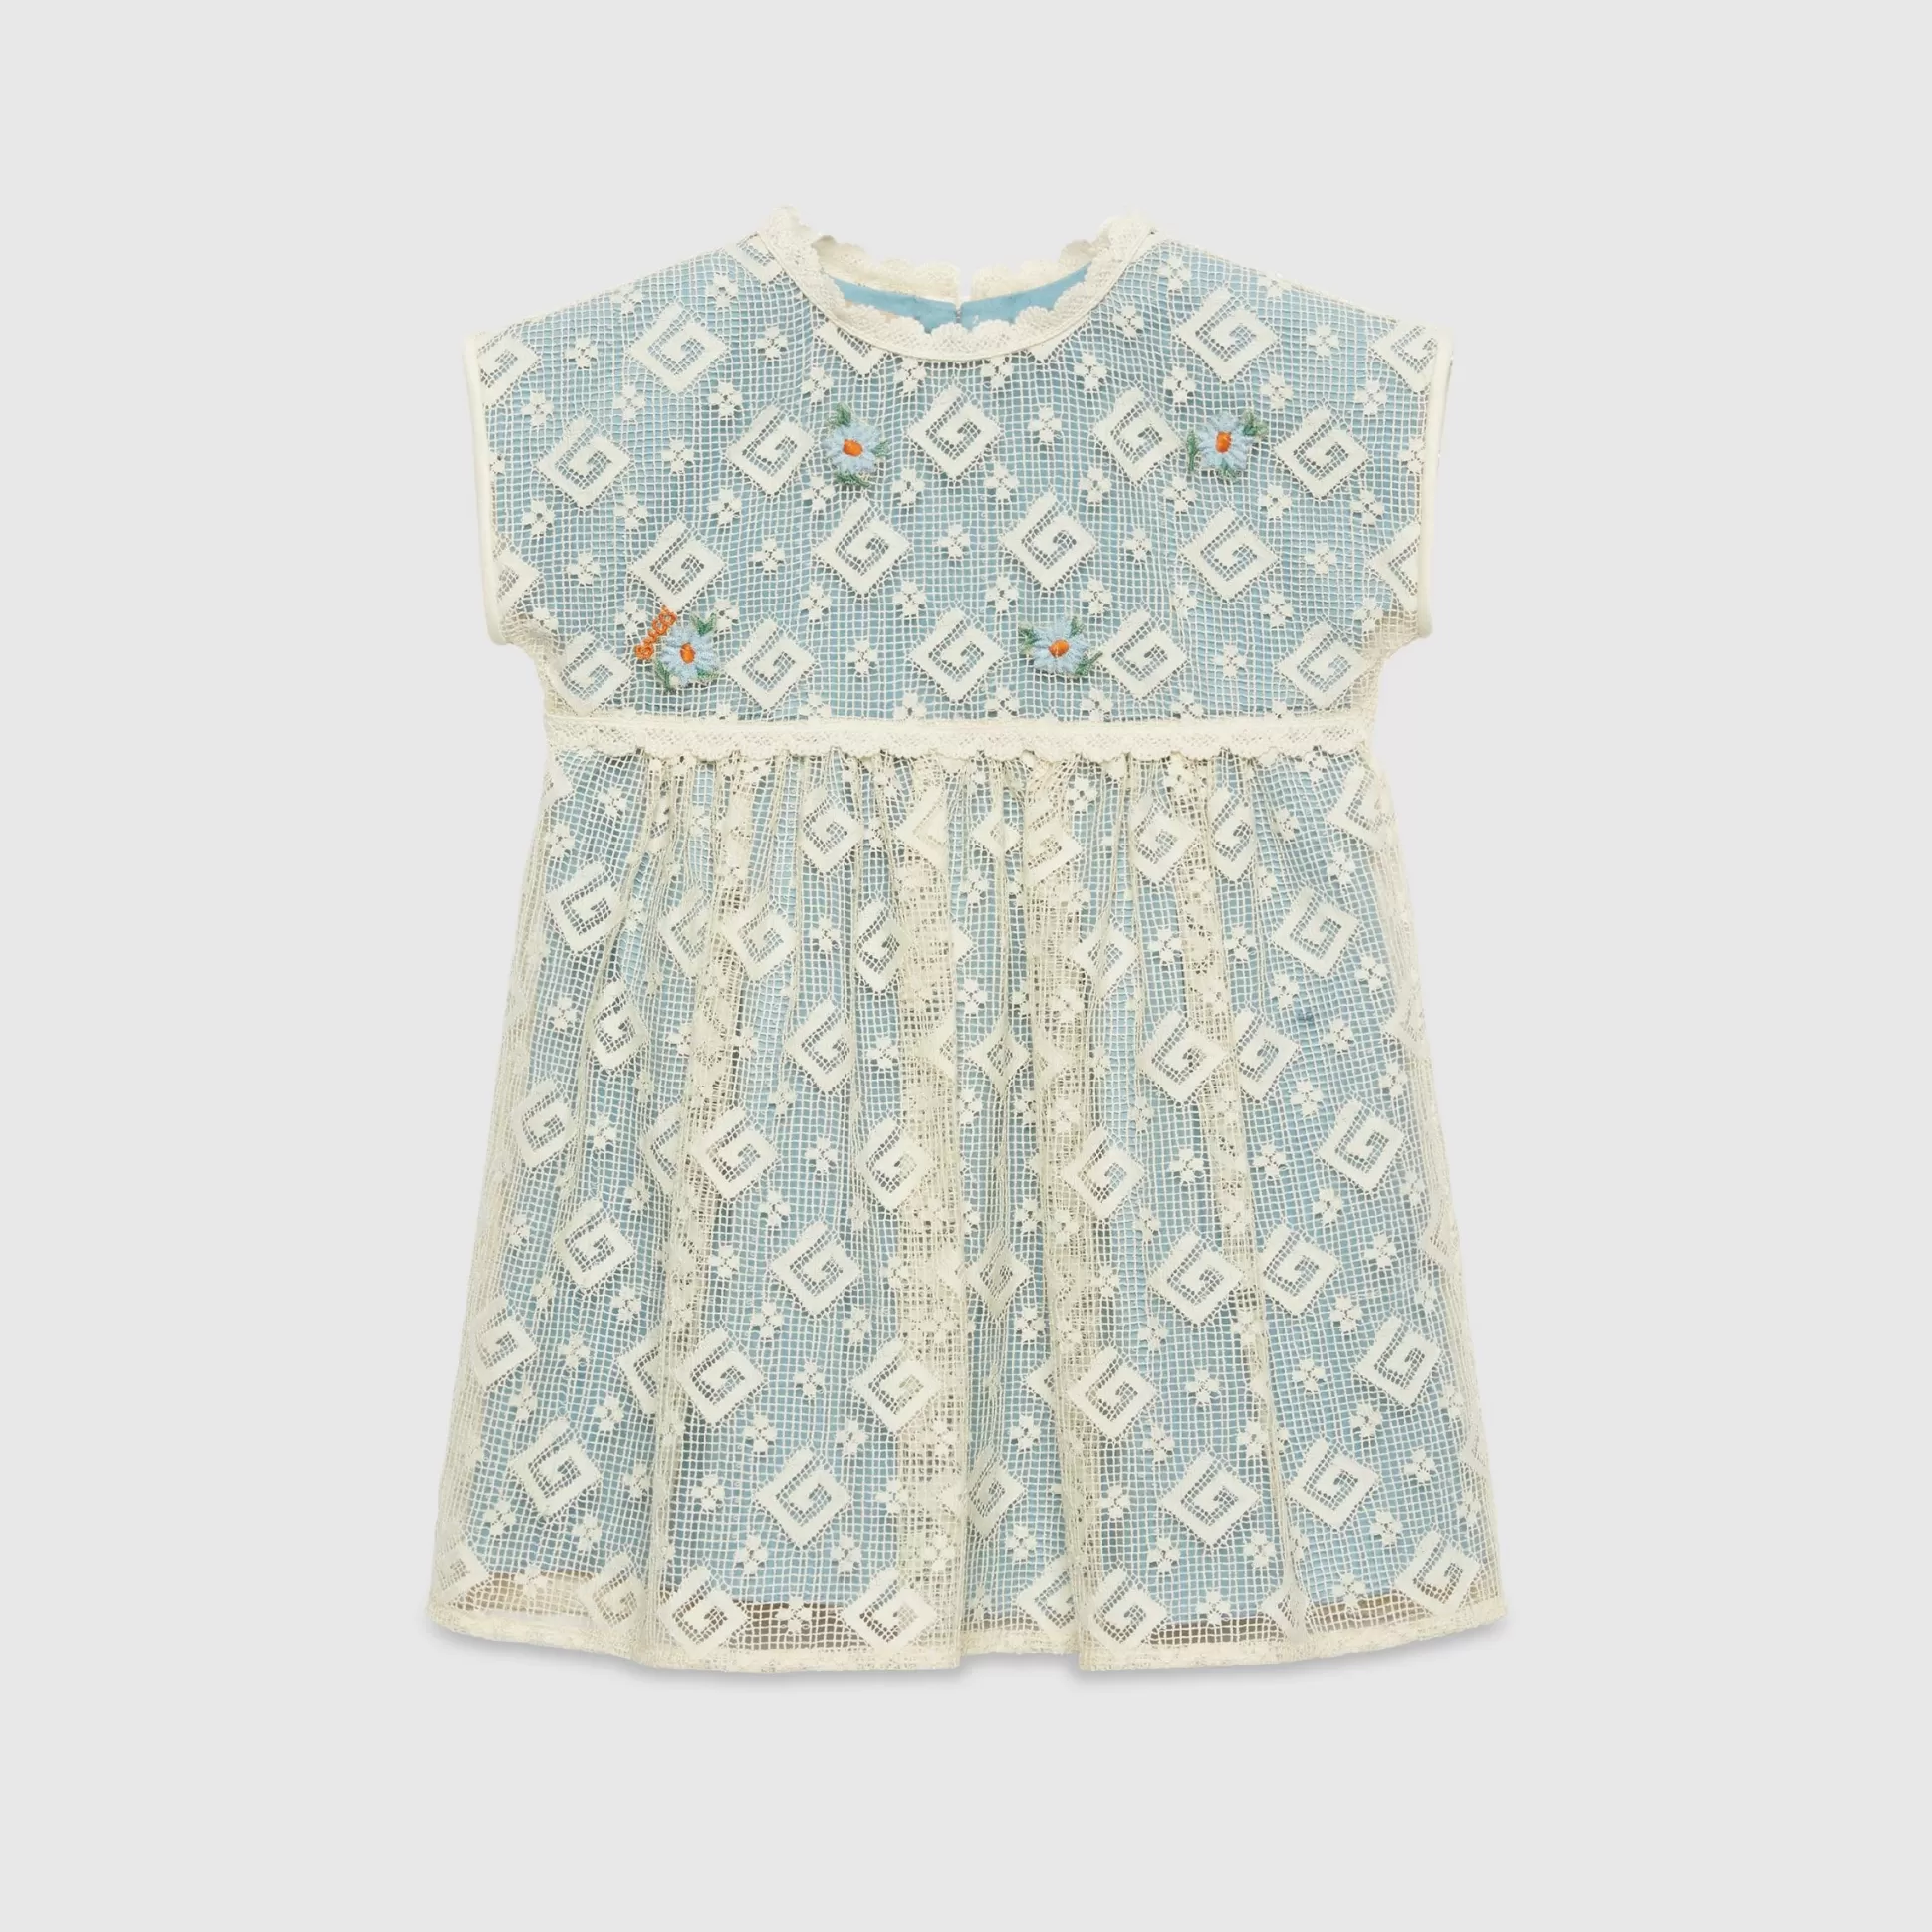 GUCCI Baby Cotton Lace Dress-Children Girls (0-36 Months)